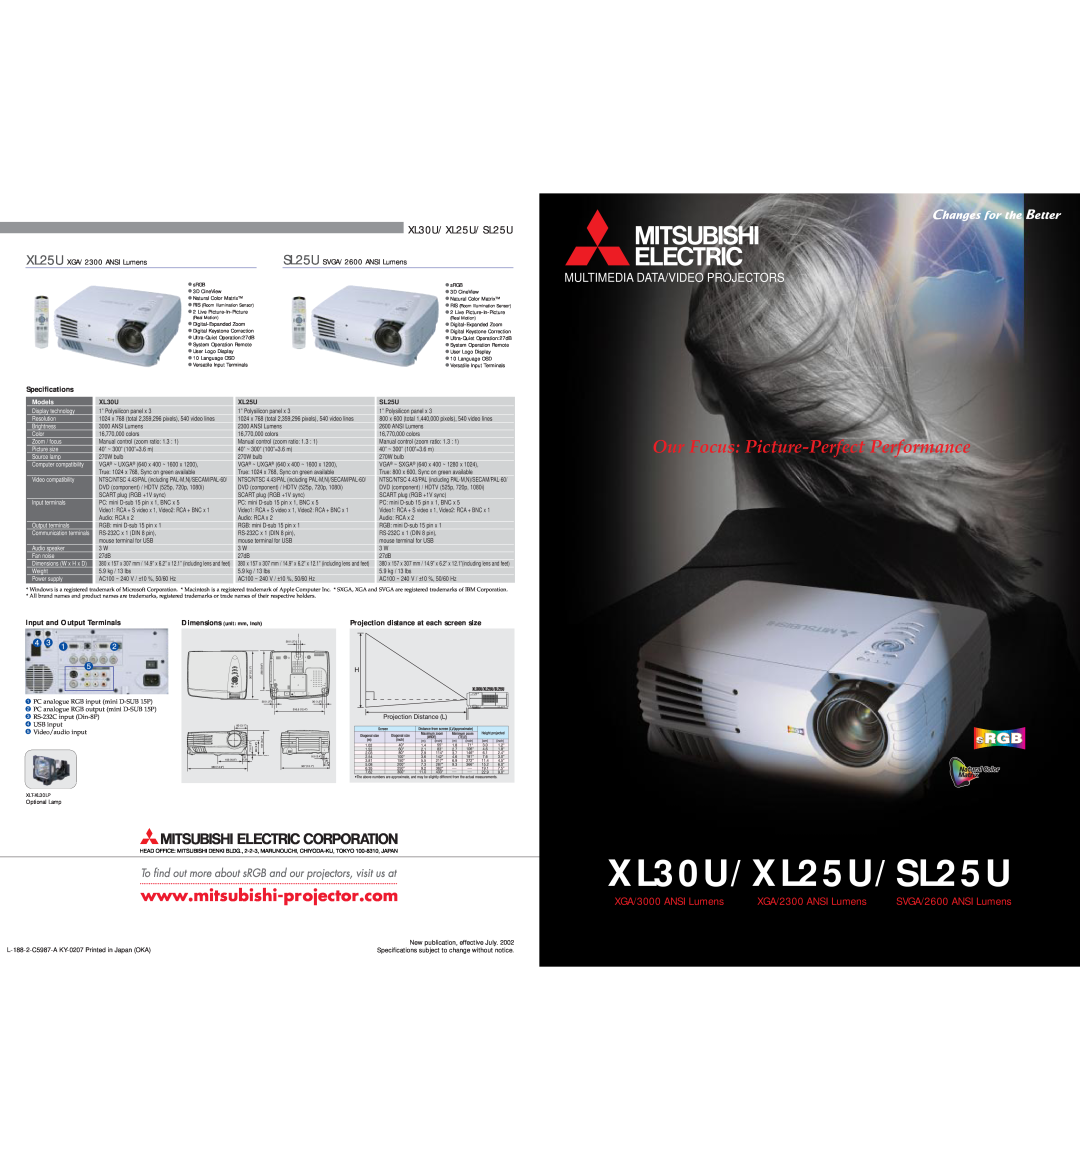 Mitsubishi Electronics specifications XL30U/XL25U/SL25U, Our Focus Picture-Perfect Performance, XGA/3000 ANSI Lumens 